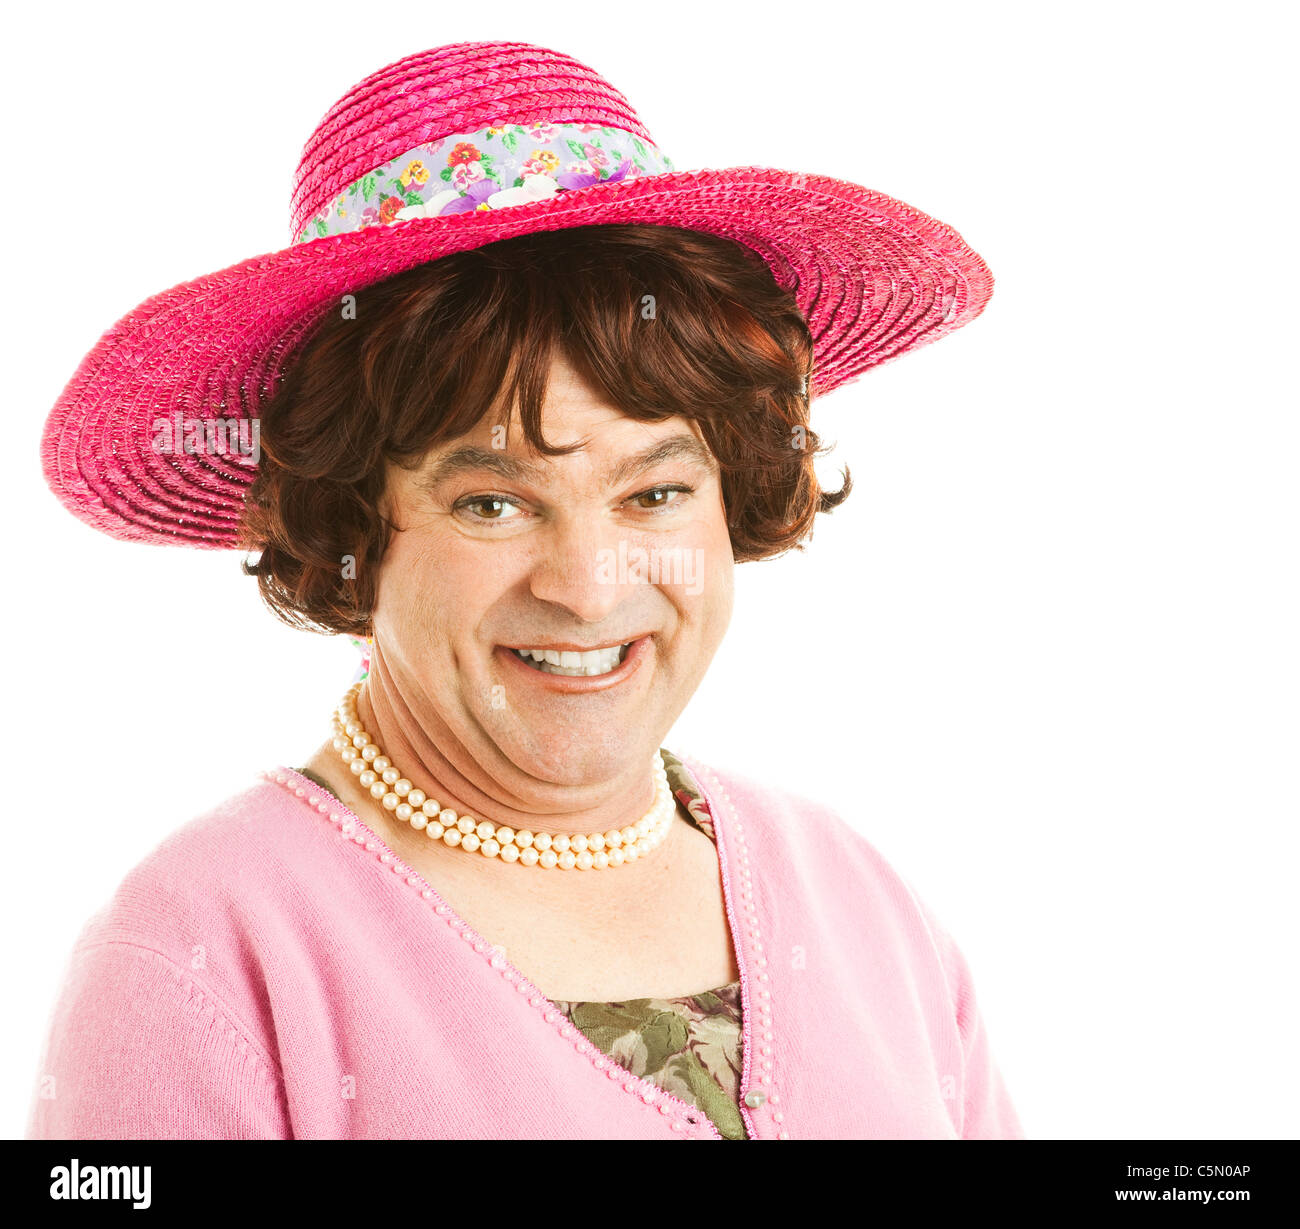 Humorvolle Porträt eines Transvestiten Promi-Imitator. Isoliert auf weiss. Stockfoto